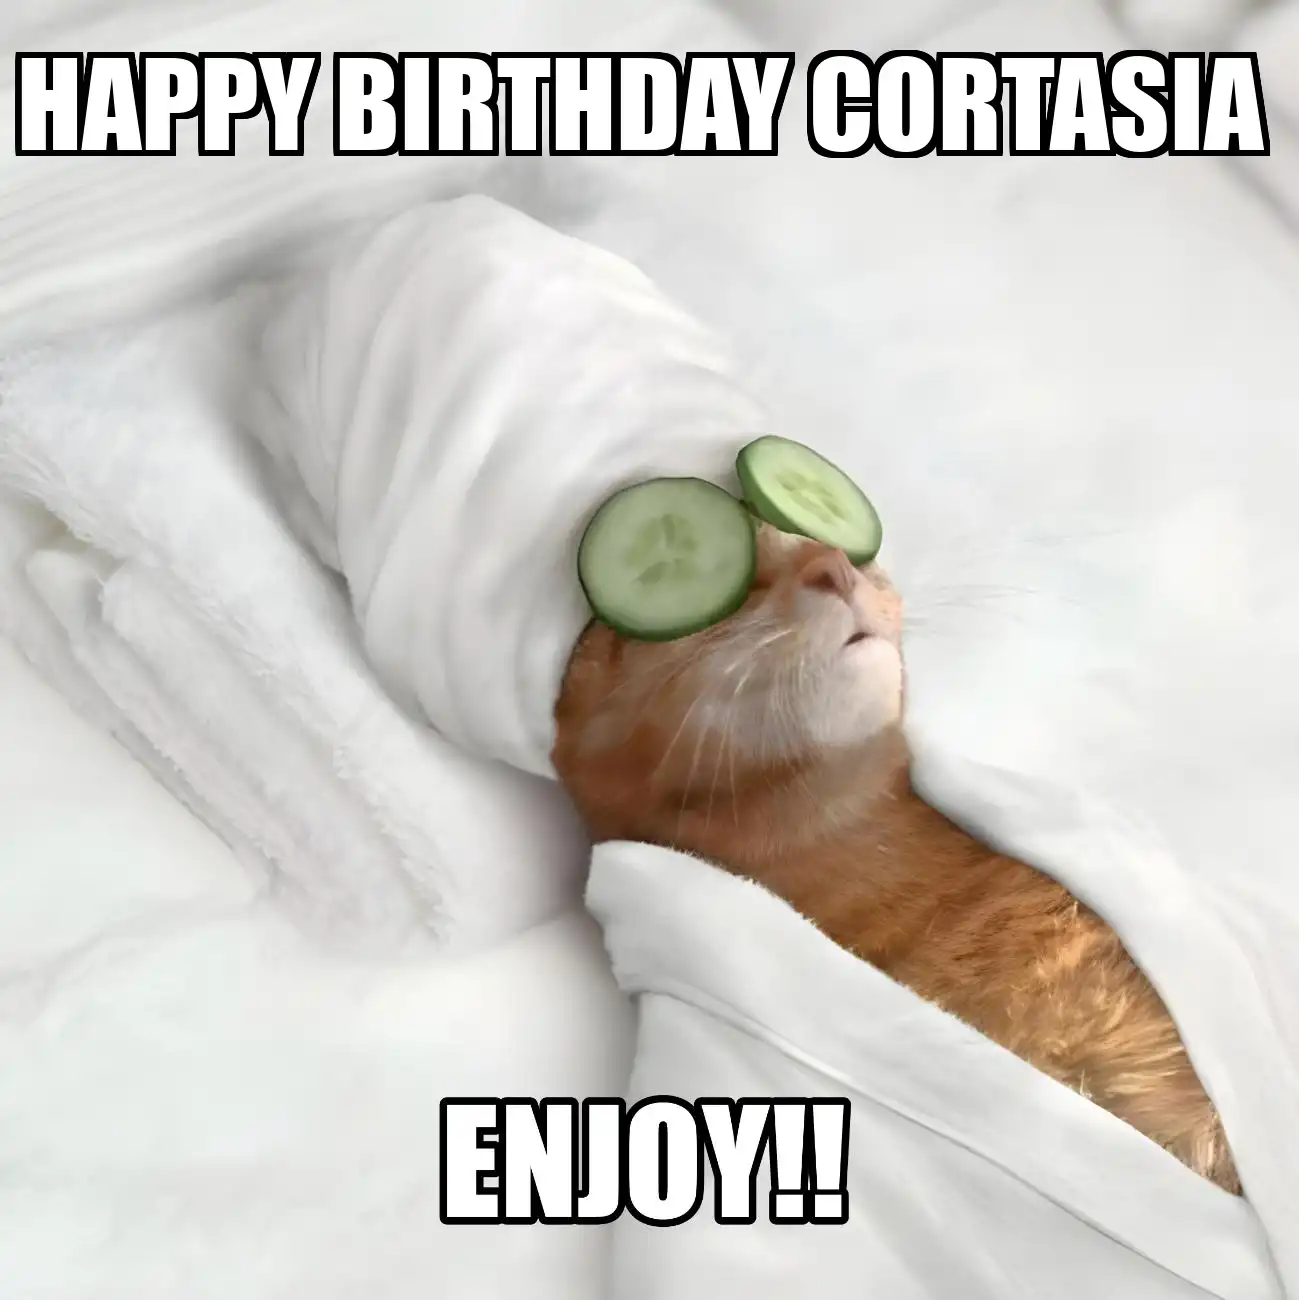 Happy Birthday Cortasia Enjoy Cat Meme